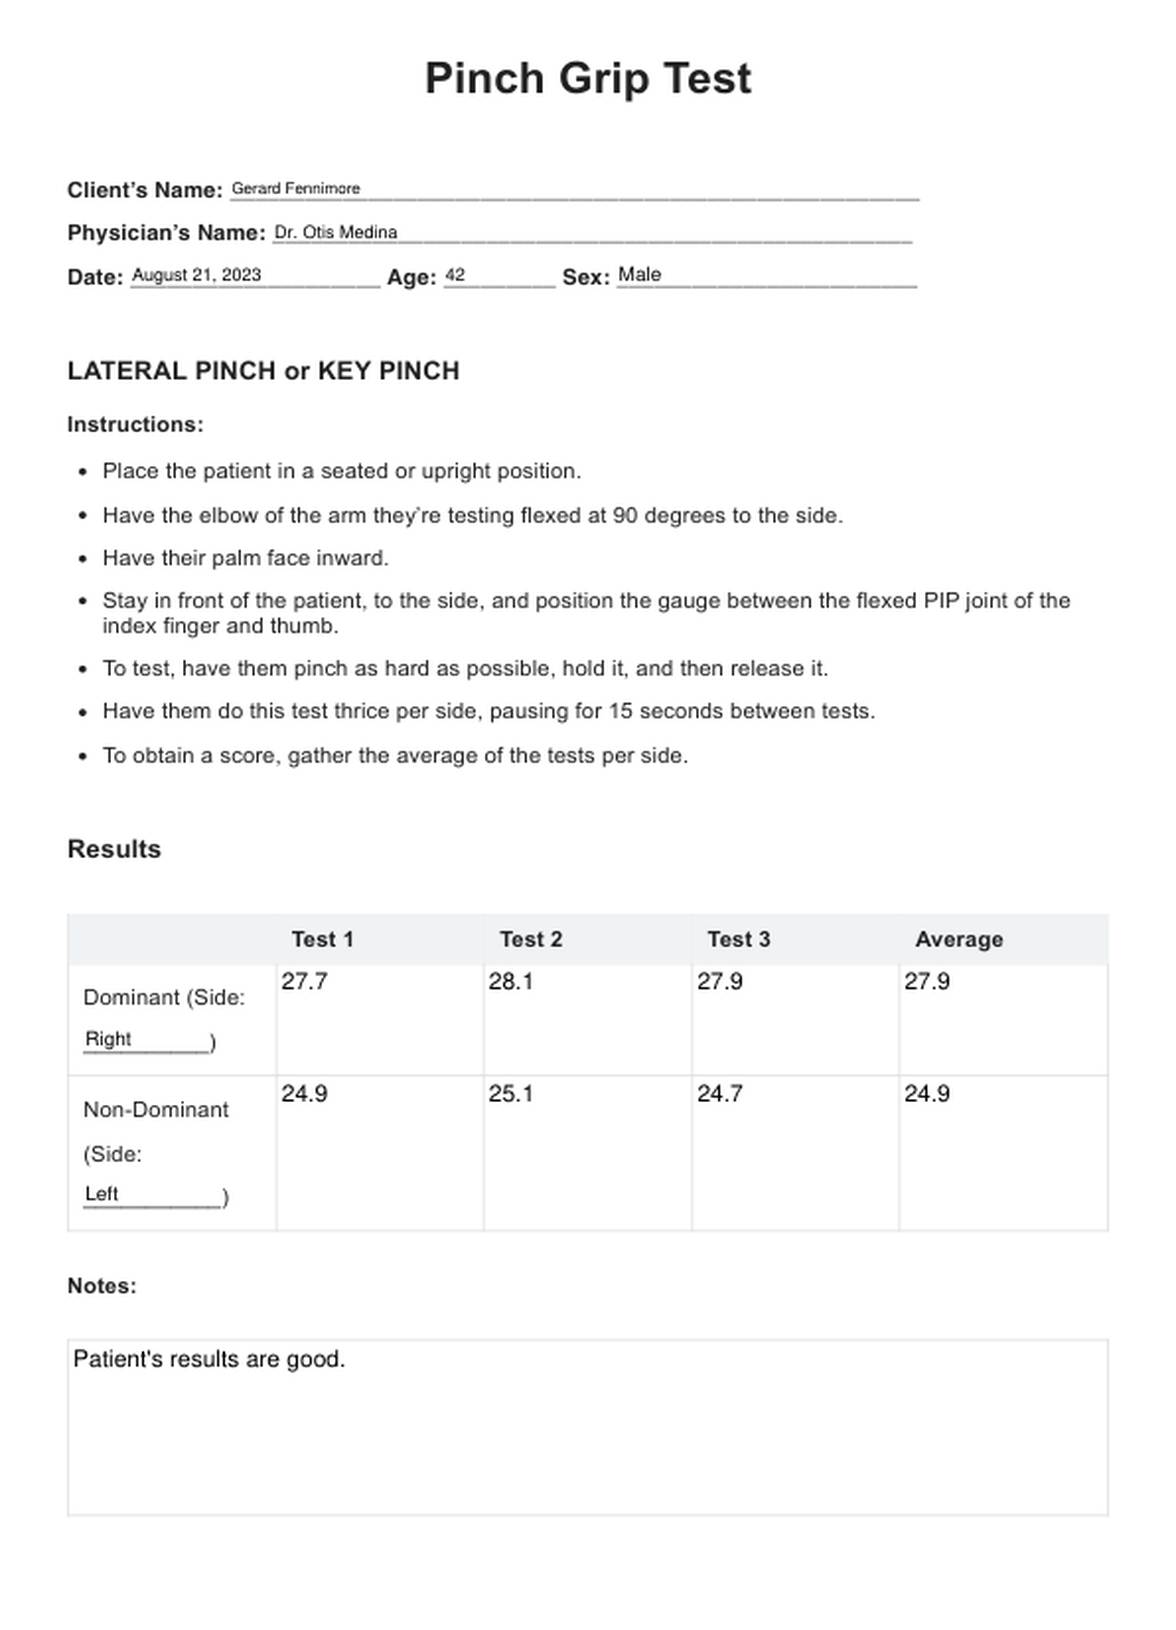 Pinch Grip Test PDF Example